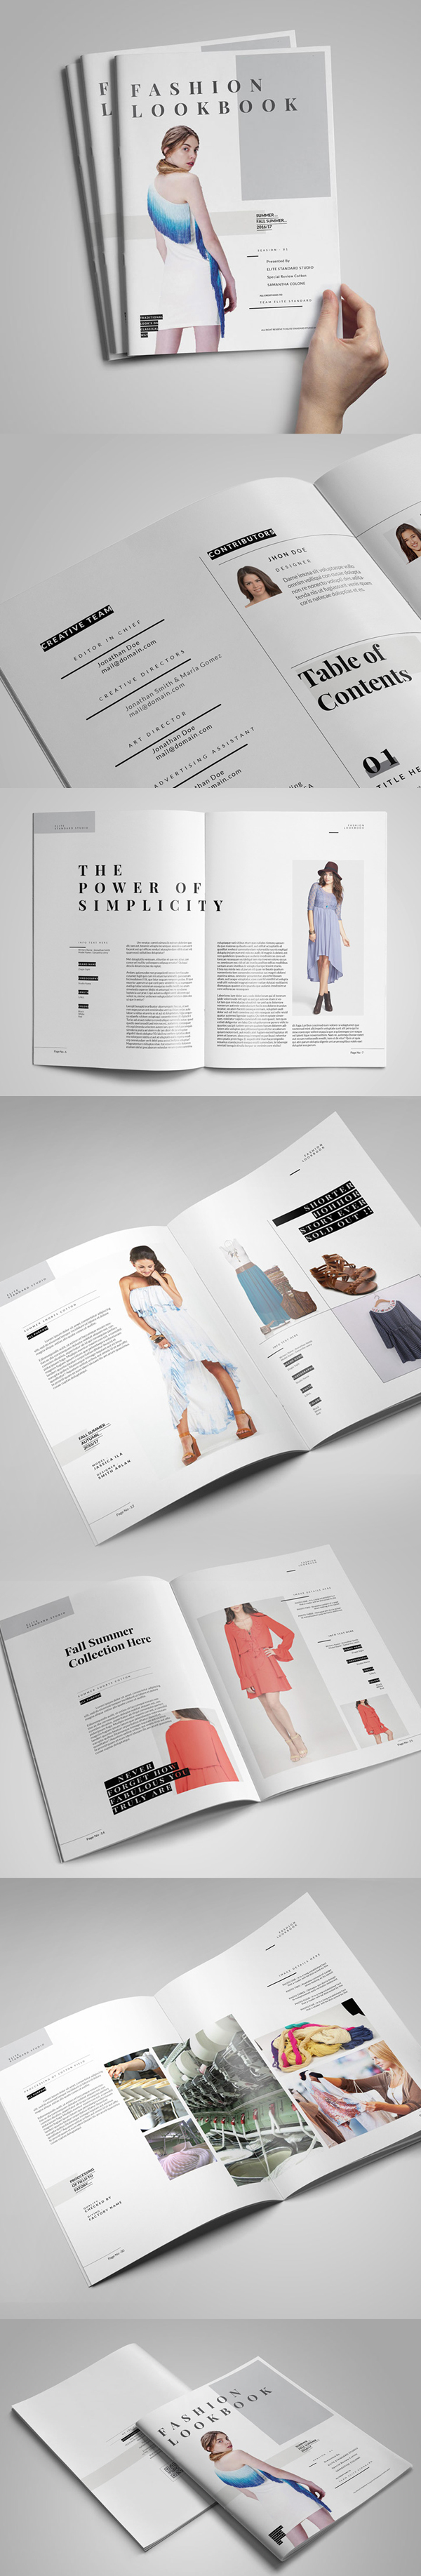 Minimal Fashion Look book / Catalog Template